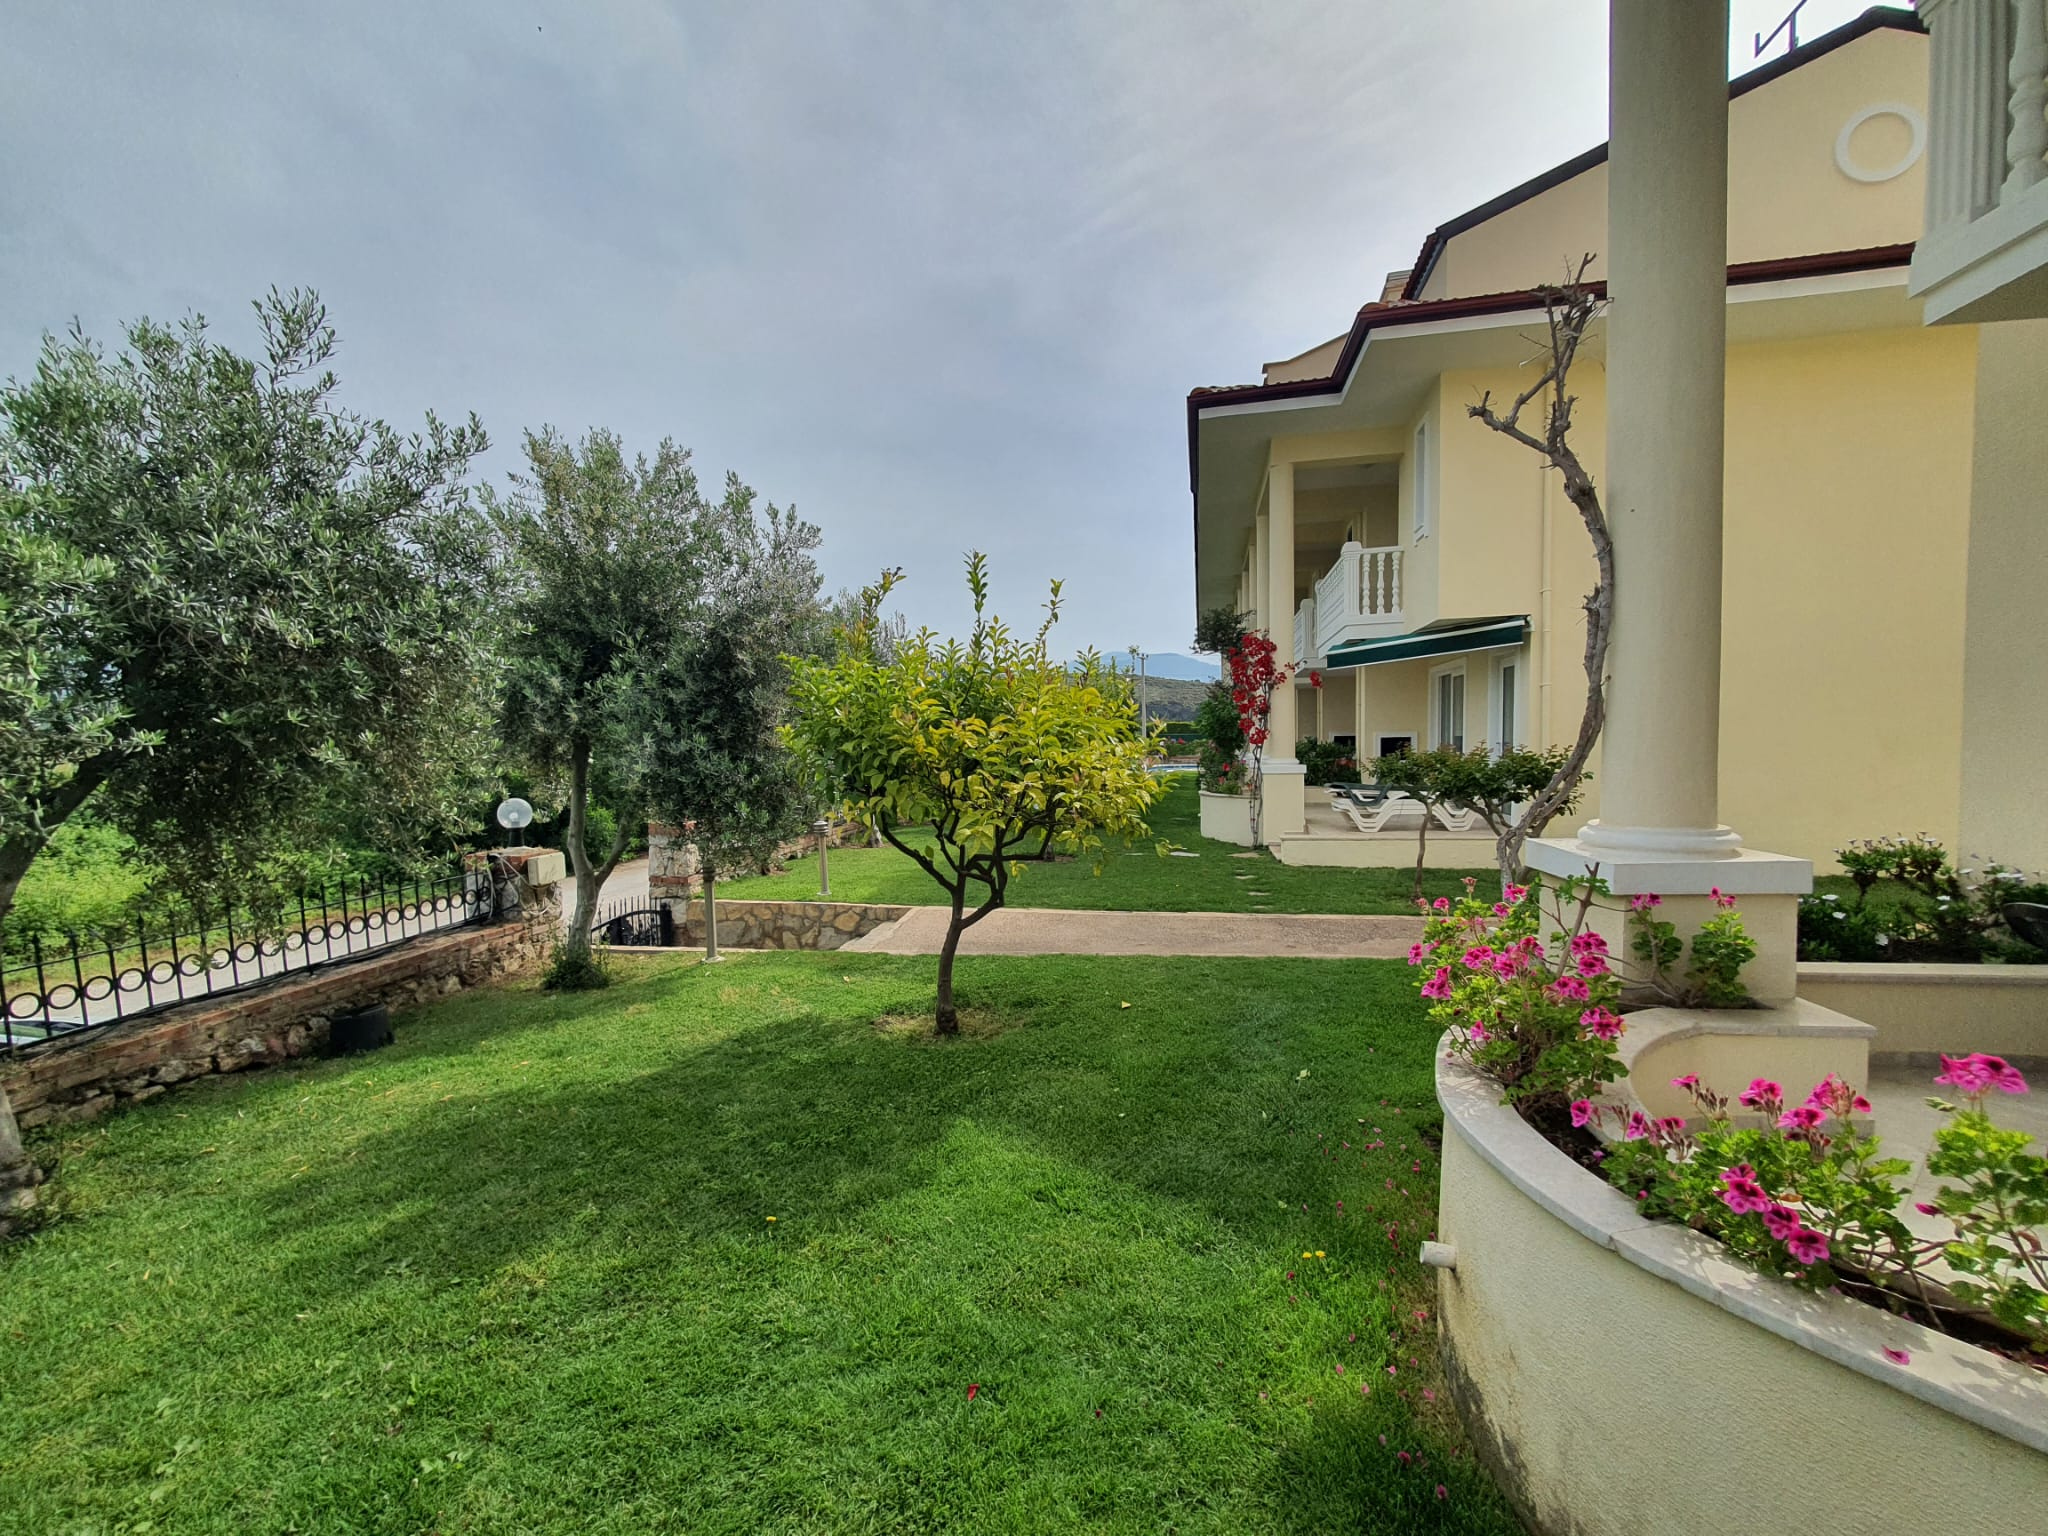 3-Storey Seafront Villa in Calis Slide Image 7